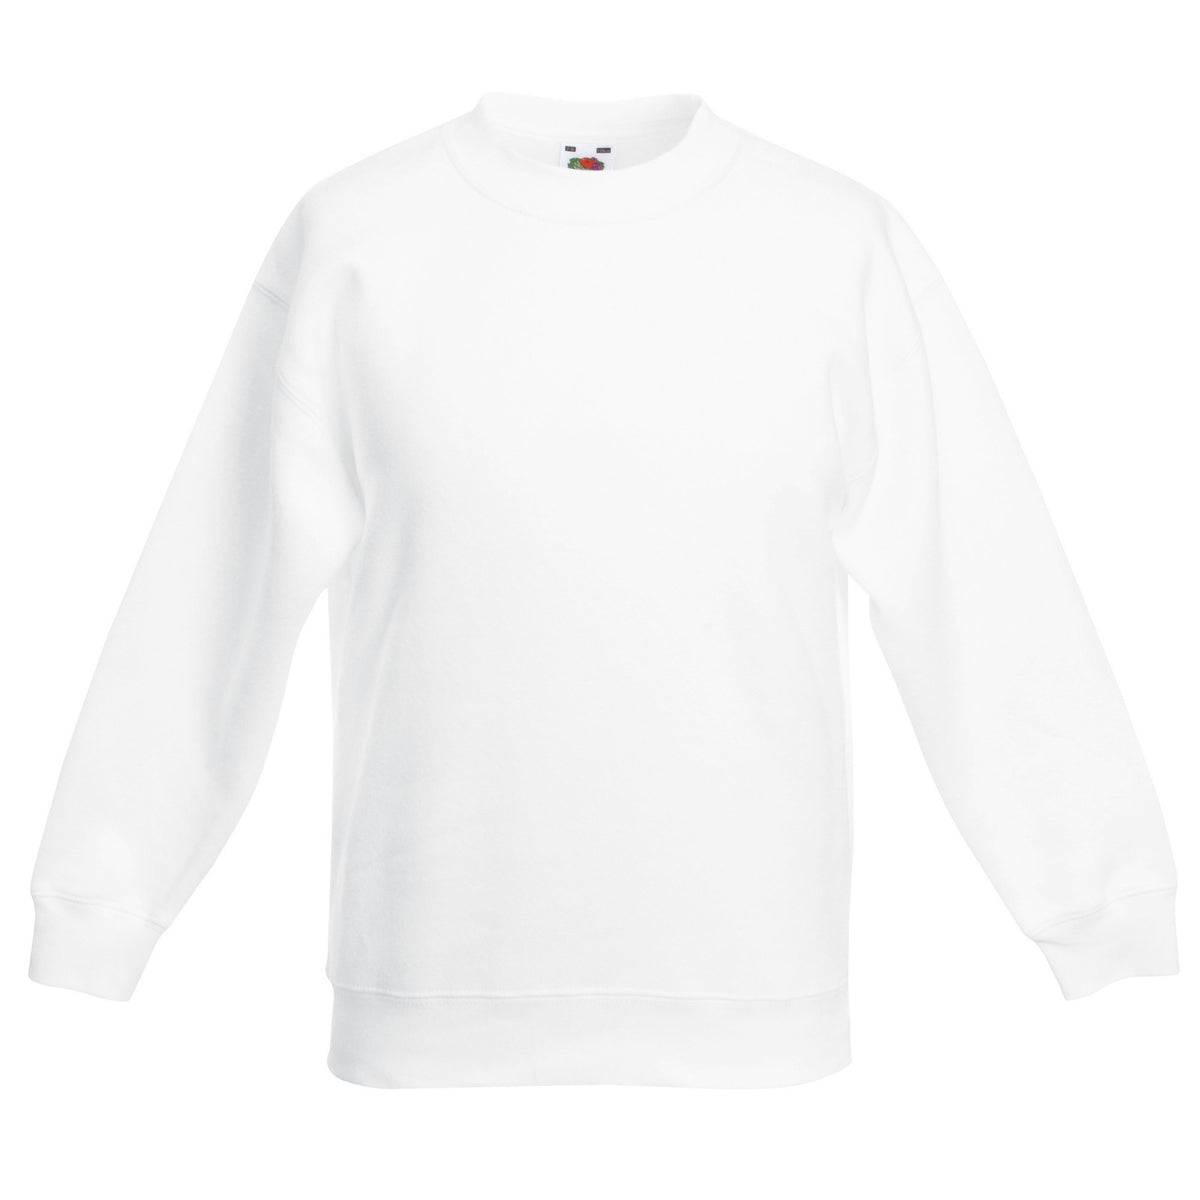 FRUIT OF THE LOOM Kids Classic Set-in Sweatshirt Jumper SS201 (3/4 Years, White)